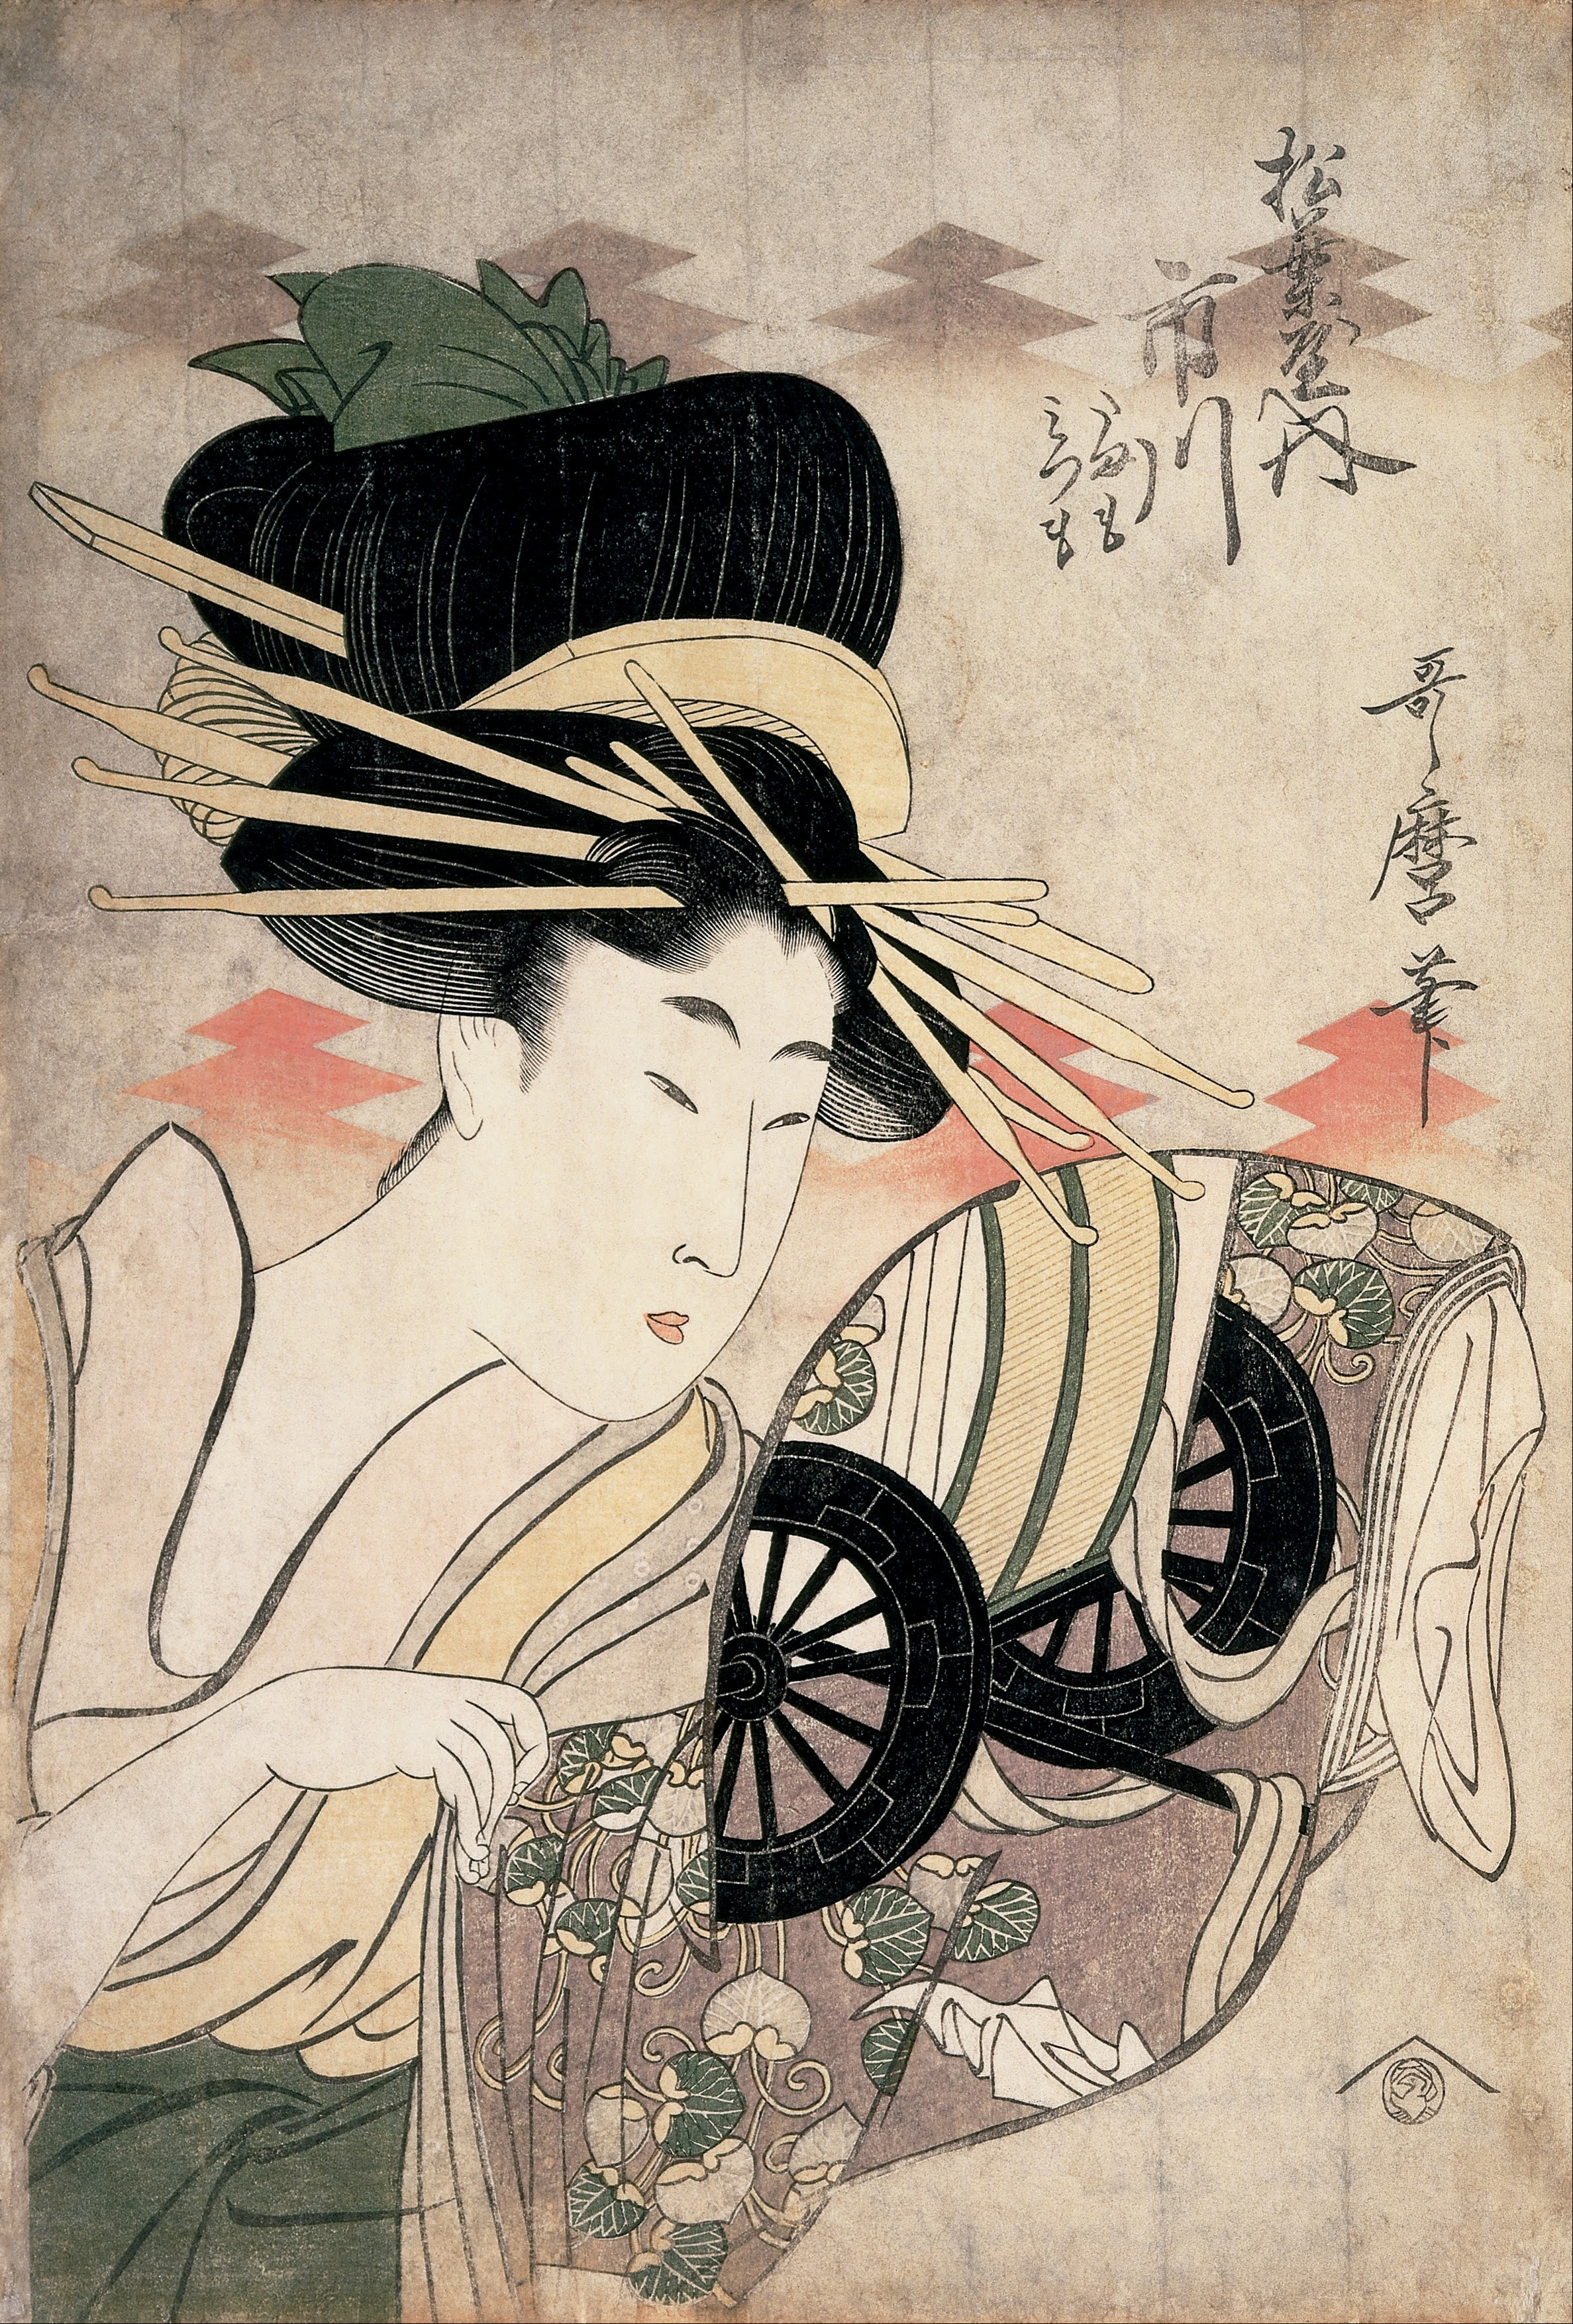 The Courtesan Ichikawa of the Matsuba Establishment by Kitagawa Utamaro - 1790s - 37,9 x 25,4 cm Cincinnati Art Museum